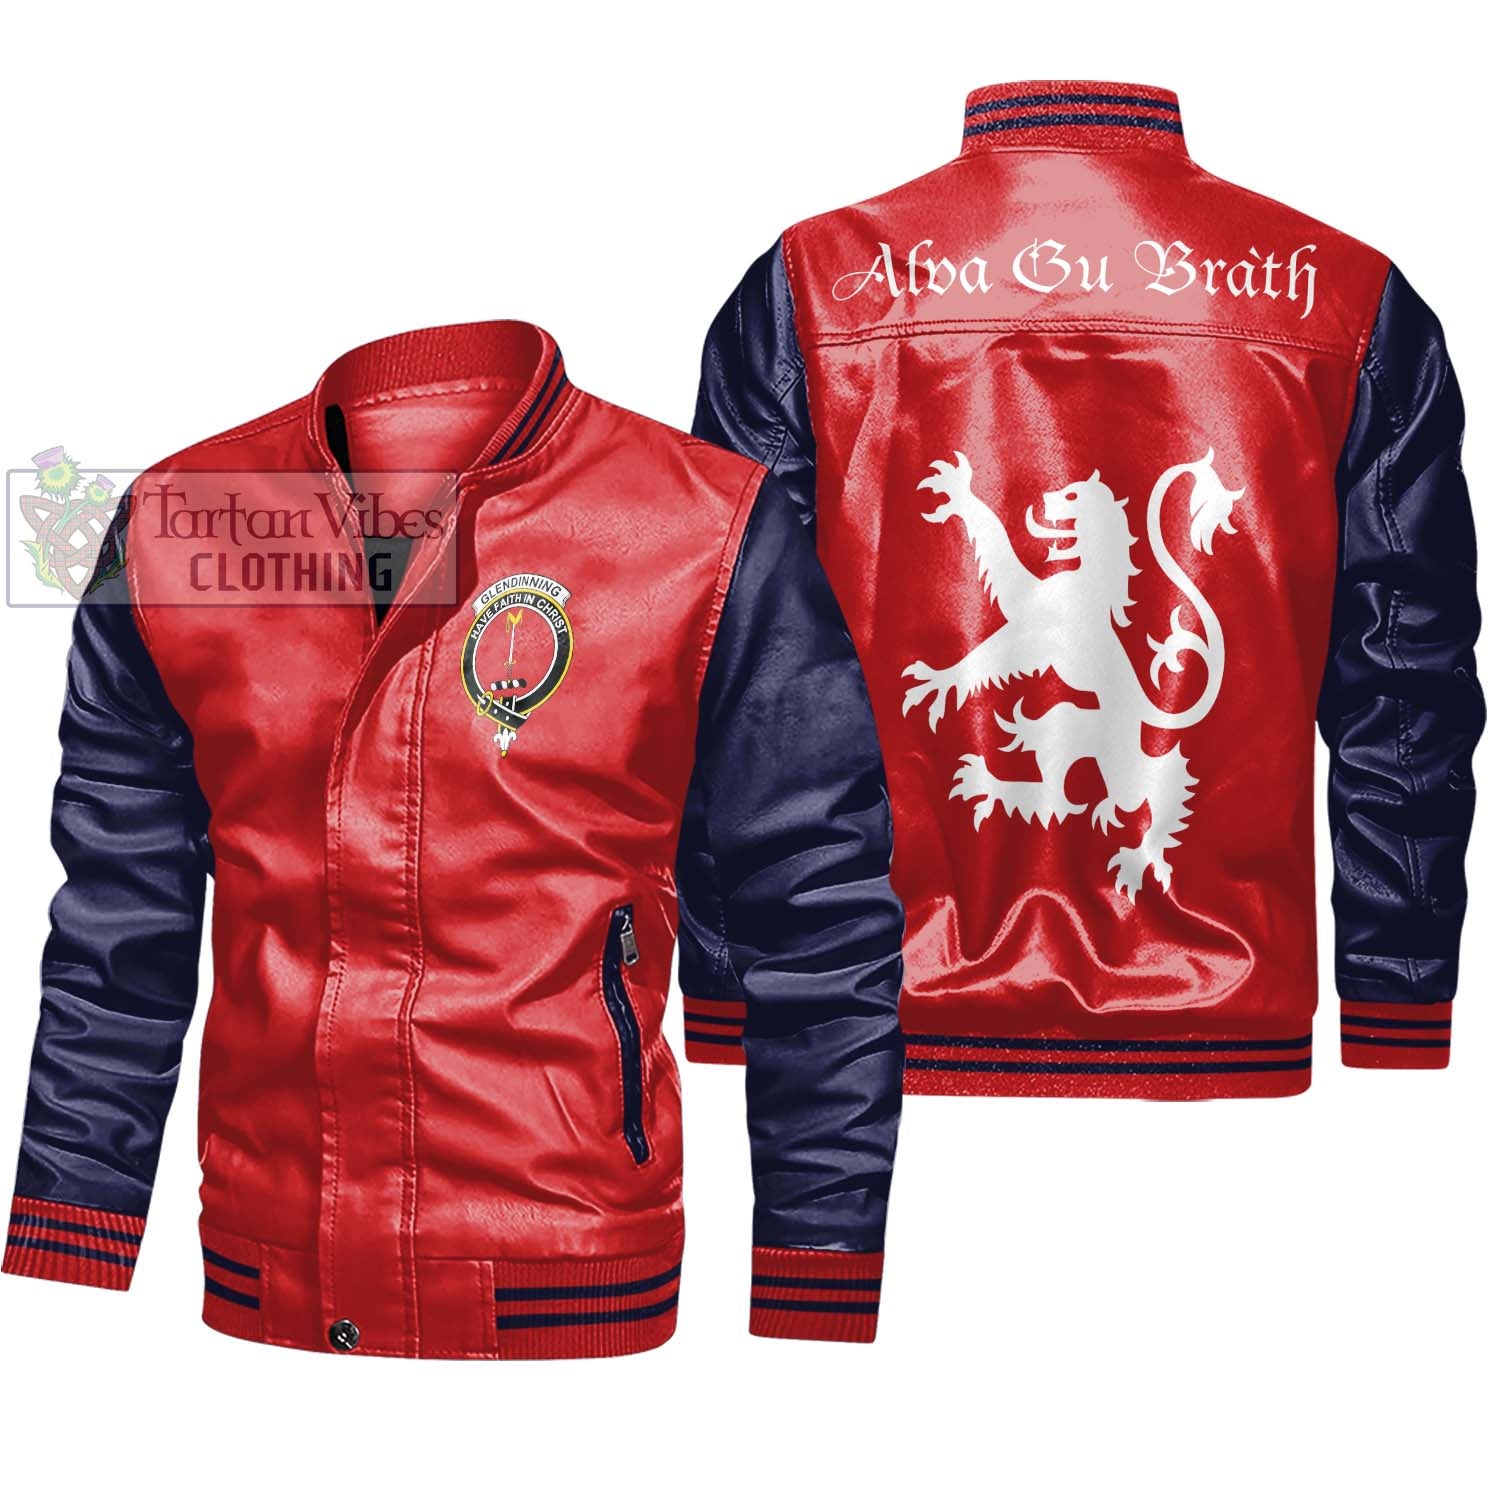 Tartan Vibes Clothing Glendinning Family Crest Leather Bomber Jacket Lion Rampant Alba Gu Brath Style